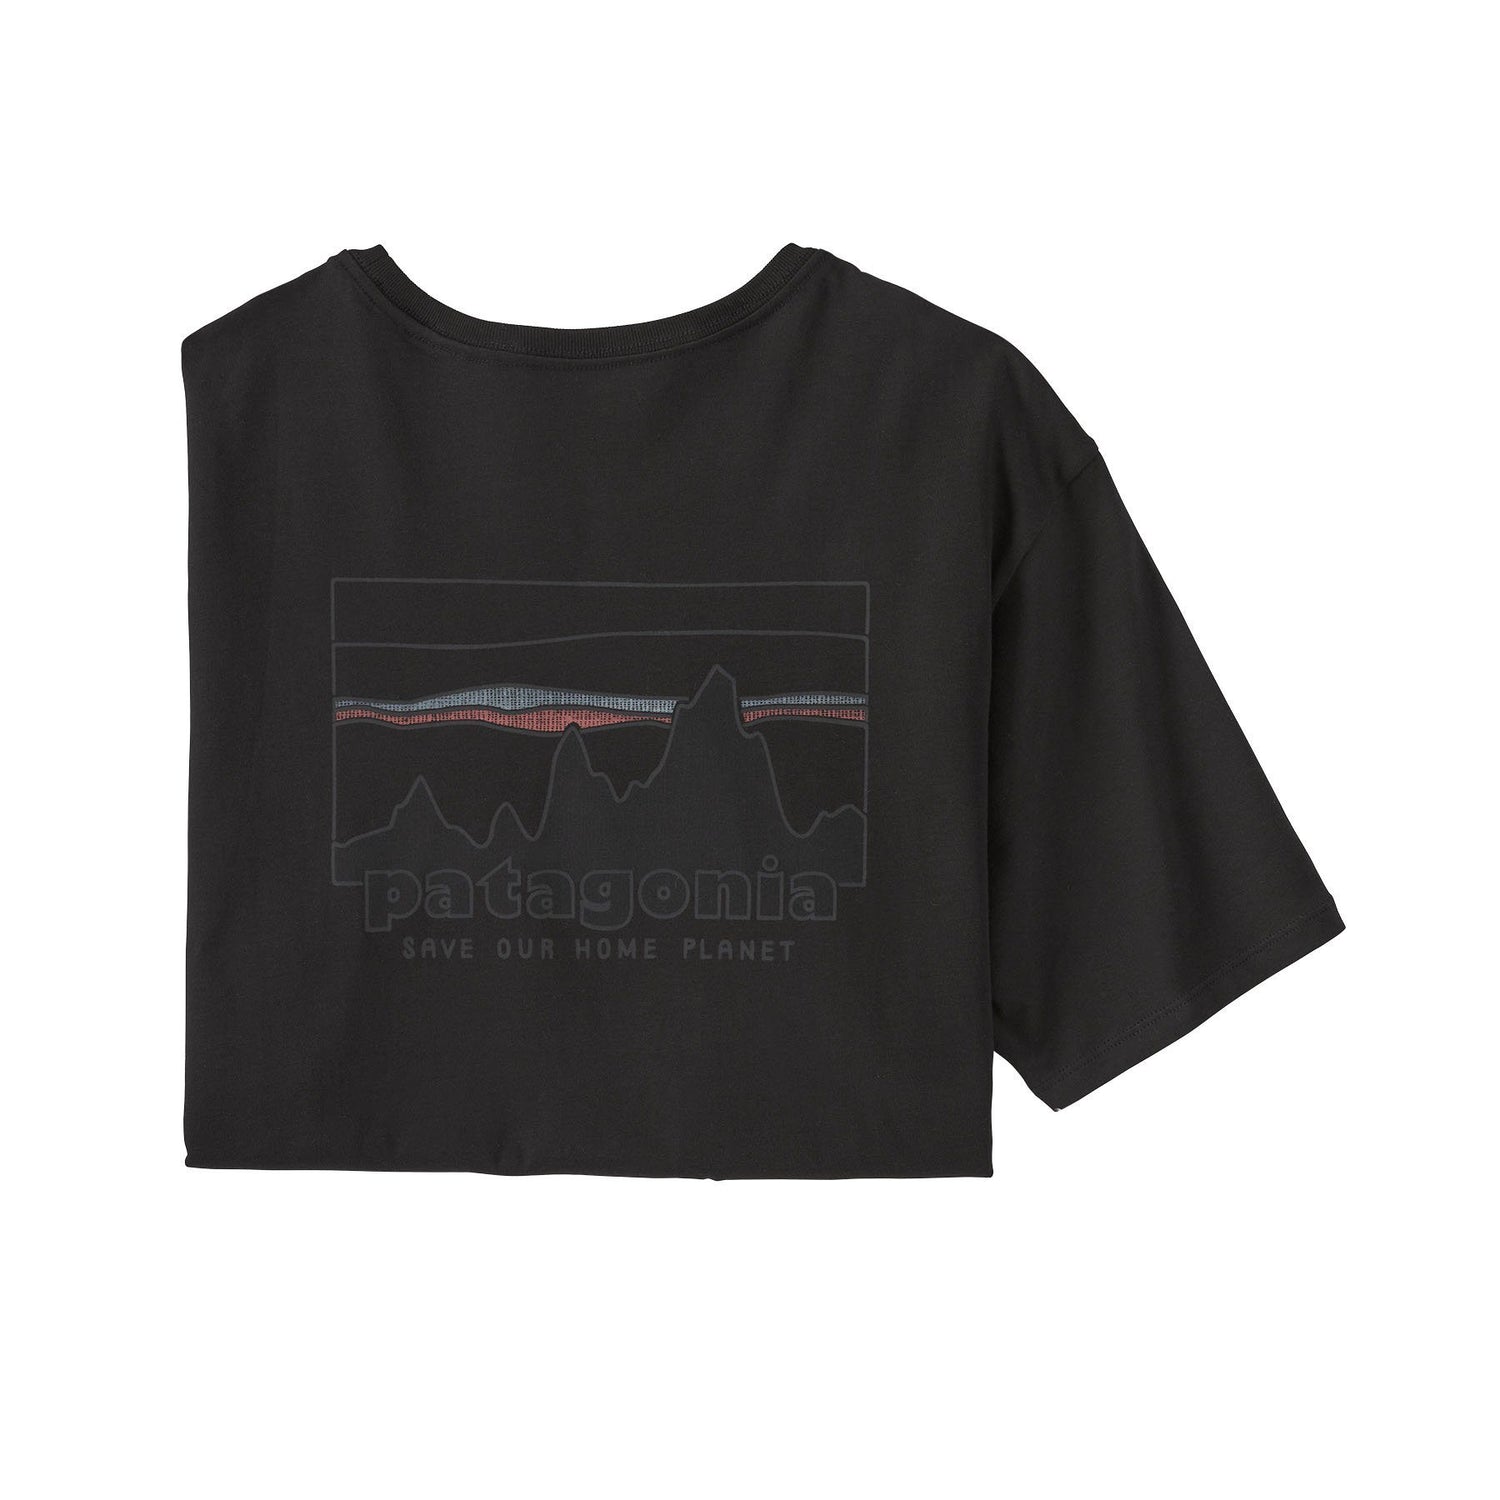 Patagonia - M's '73 Skyline Organic T-Shirt - 100% Organic Cotton - Weekendbee - sustainable sportswear